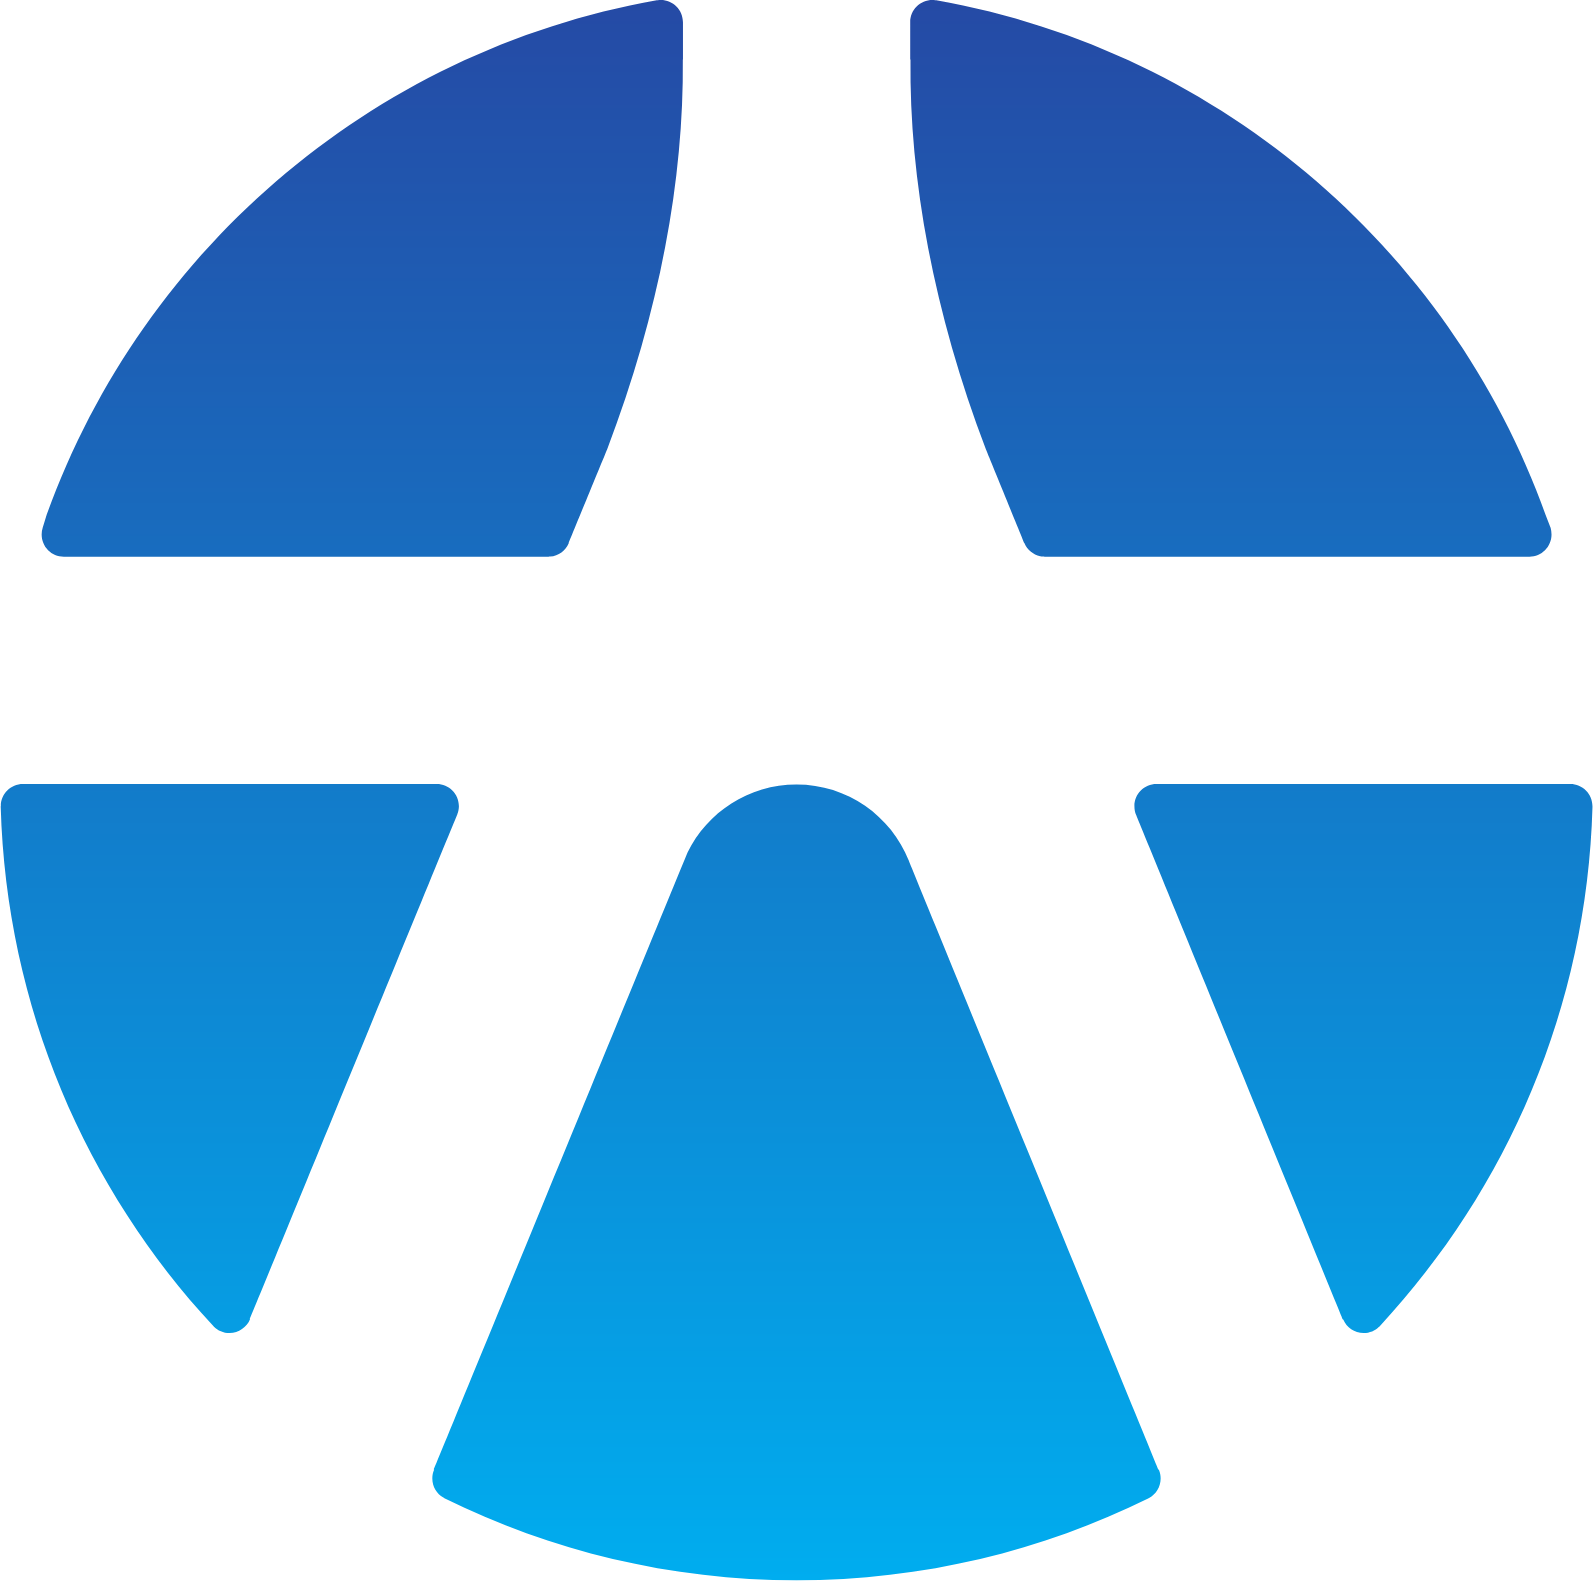 Yuanta Financial Holding logo (transparent PNG)